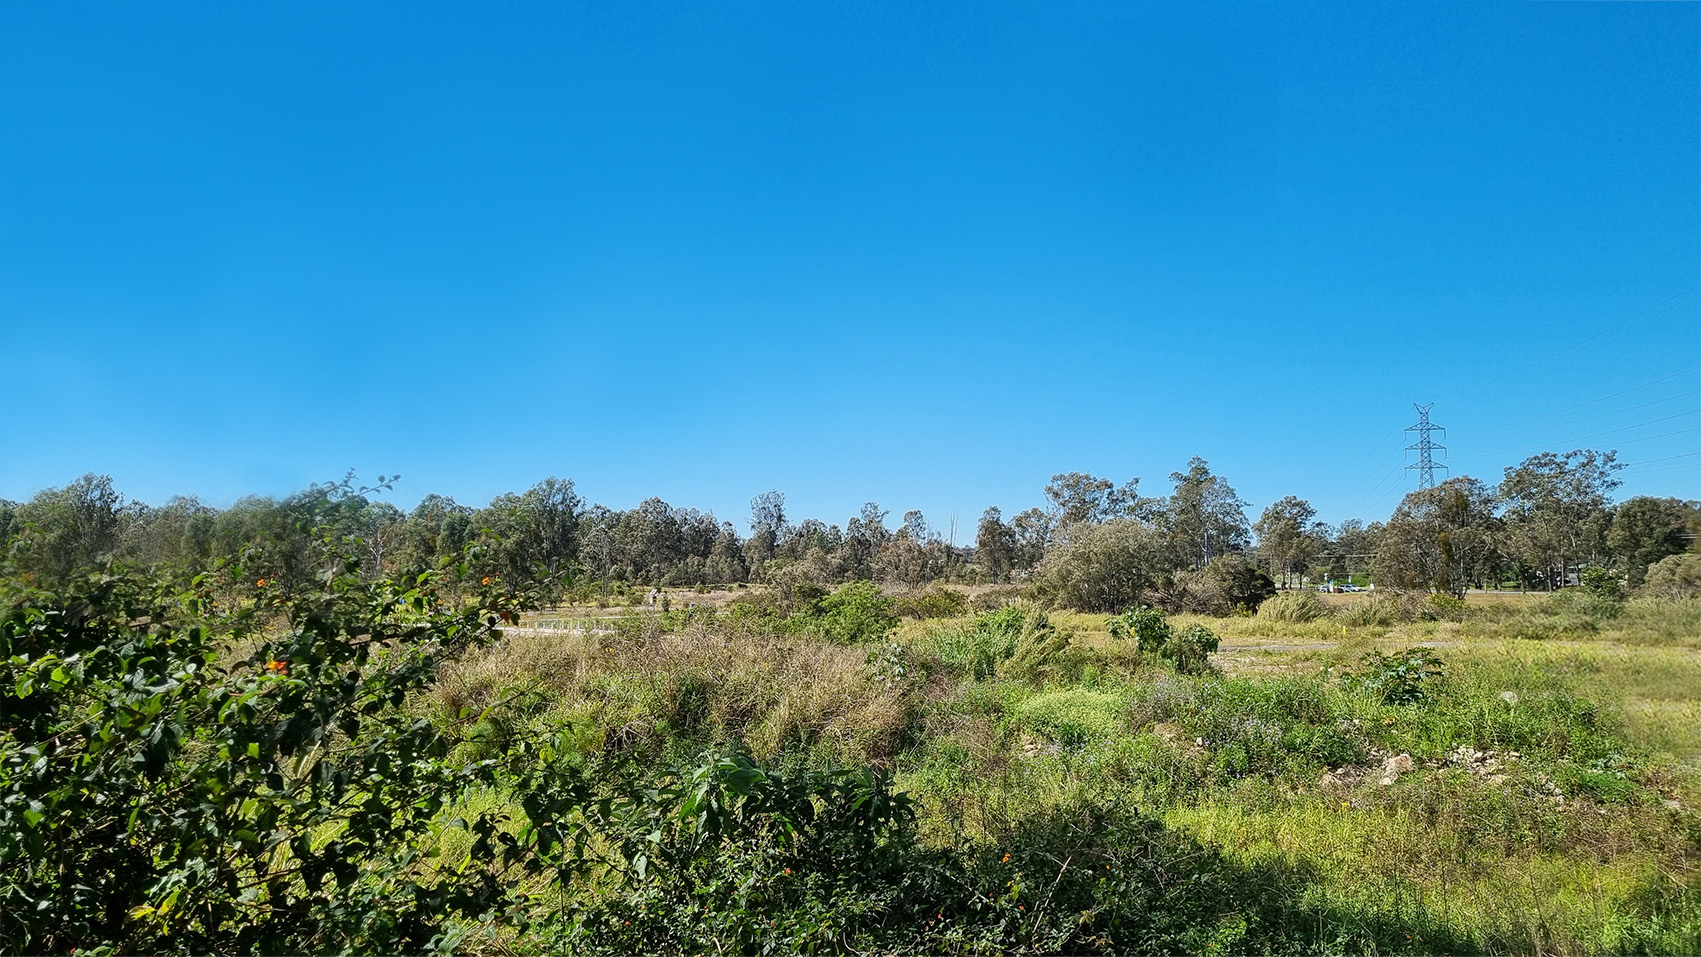 Wide shot of a horizontal bushy Australian landscape on a bright blue sky day.